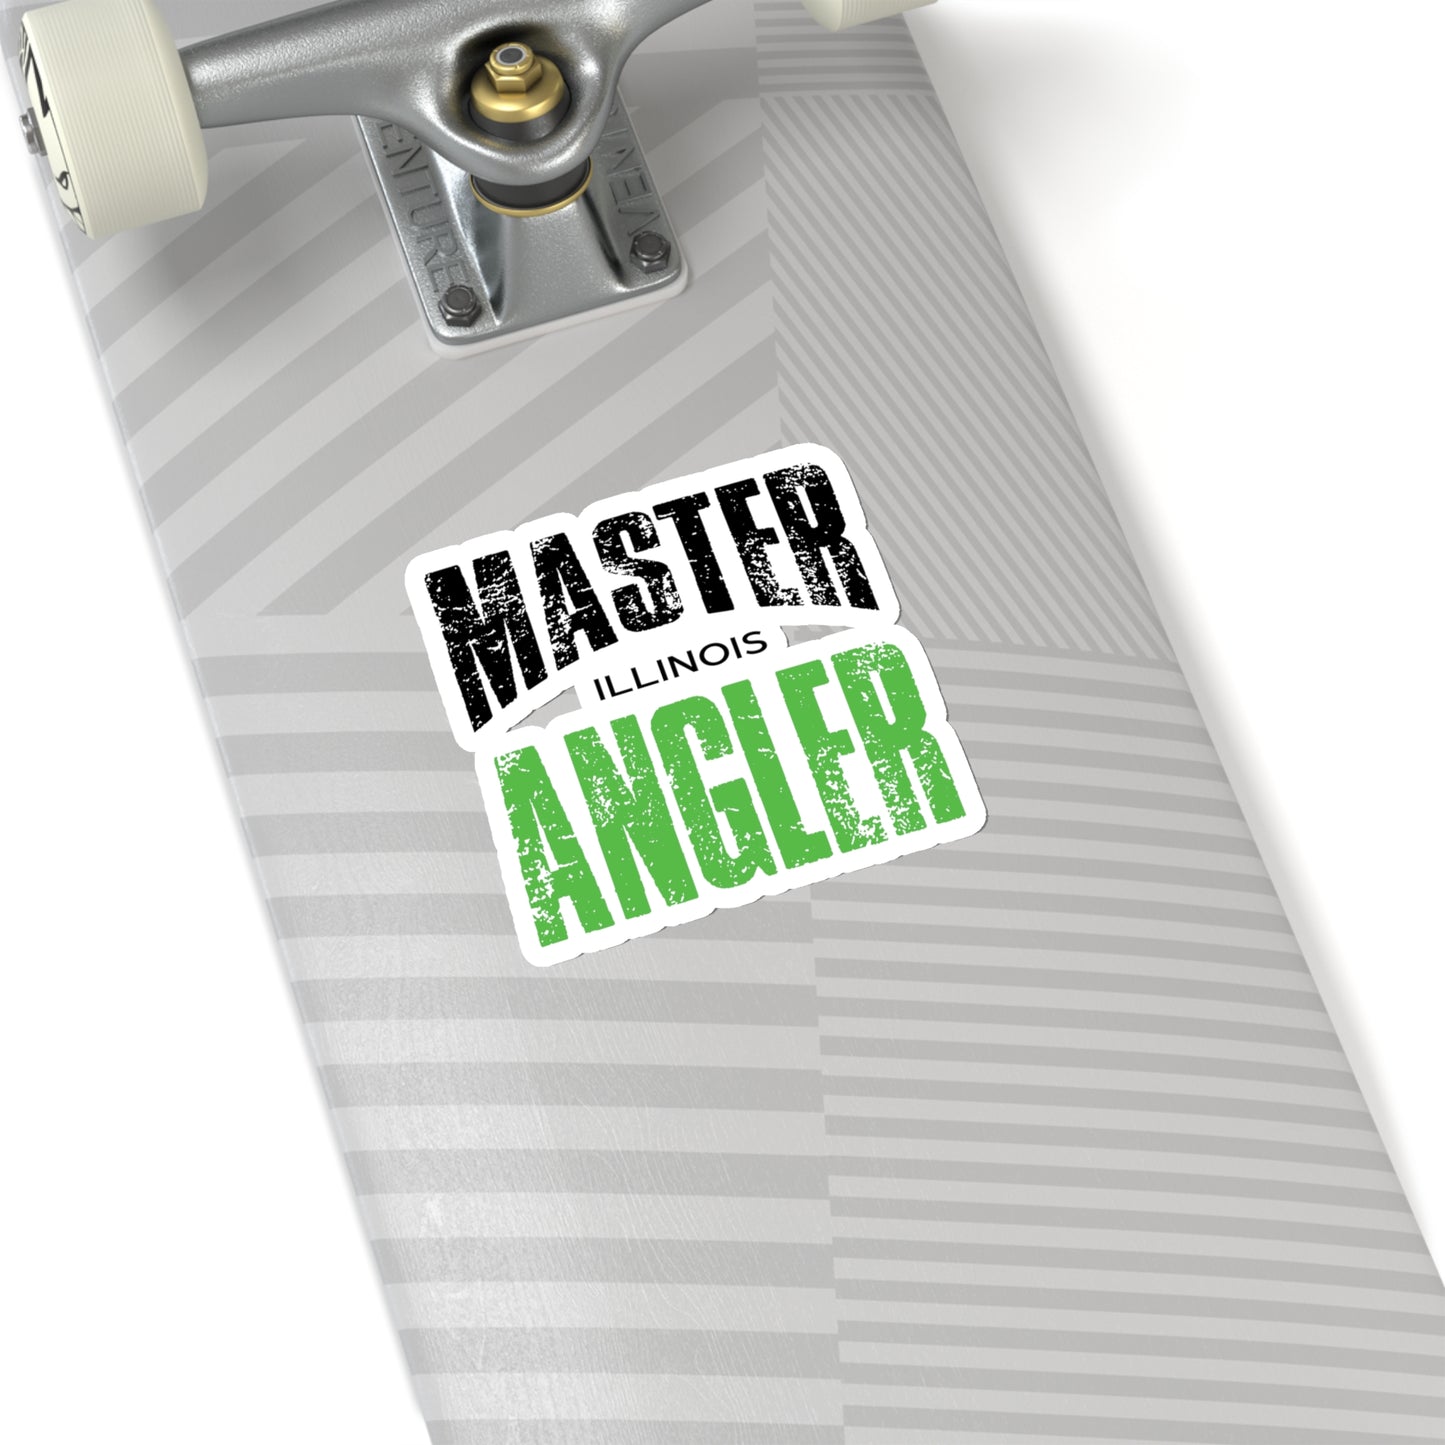 Illinois Master Angler Sticker - GREEN